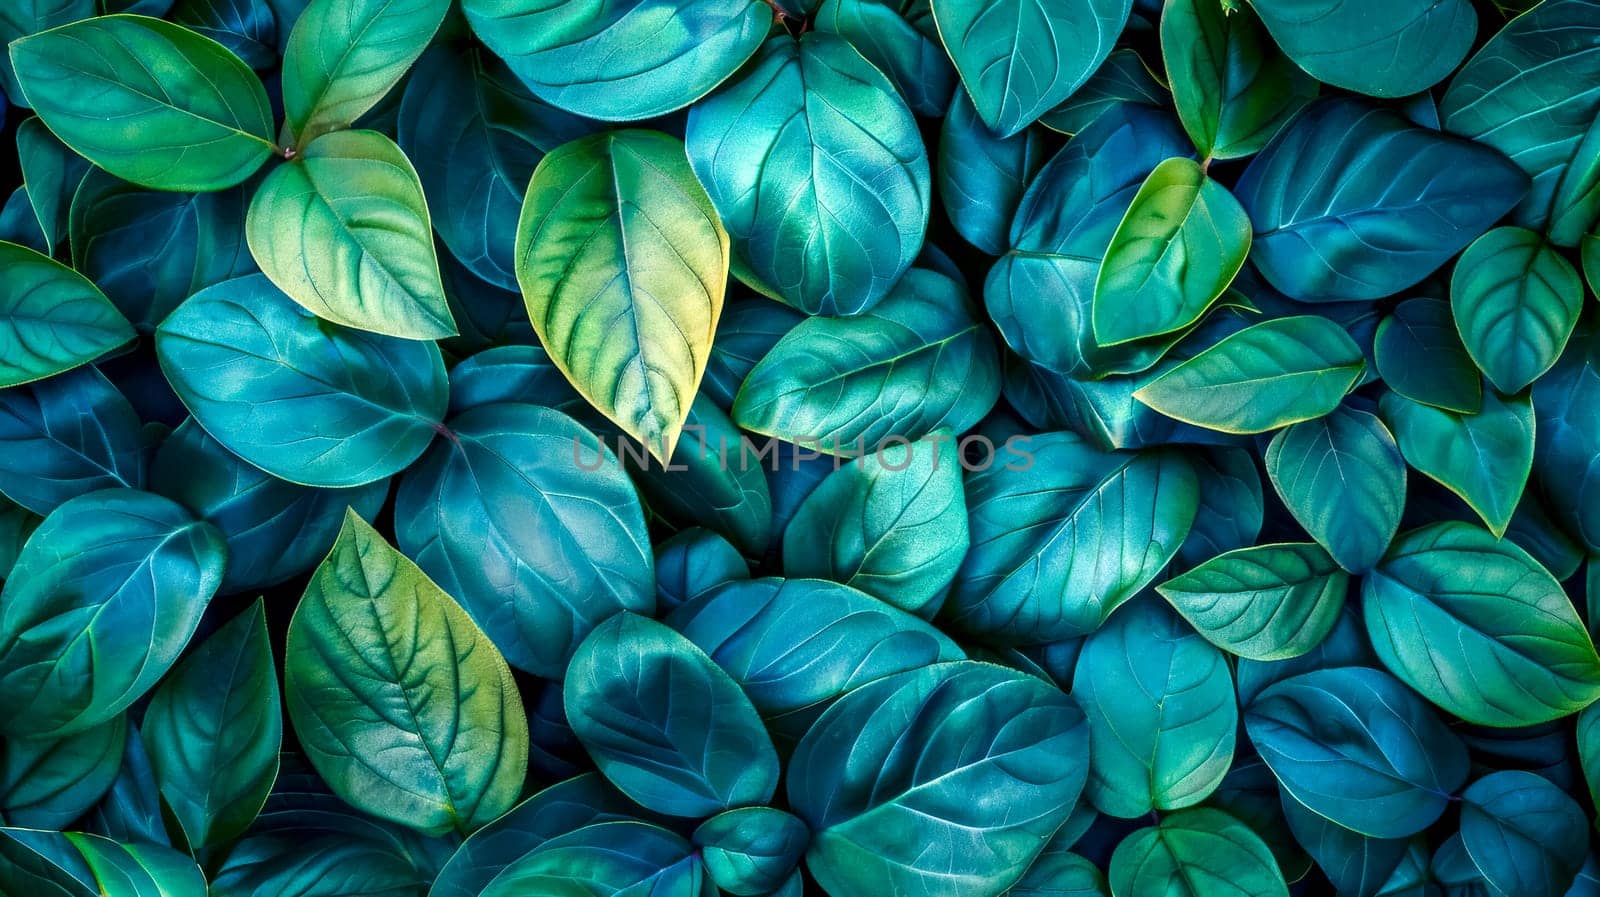 Lush green foliage texture background by Edophoto